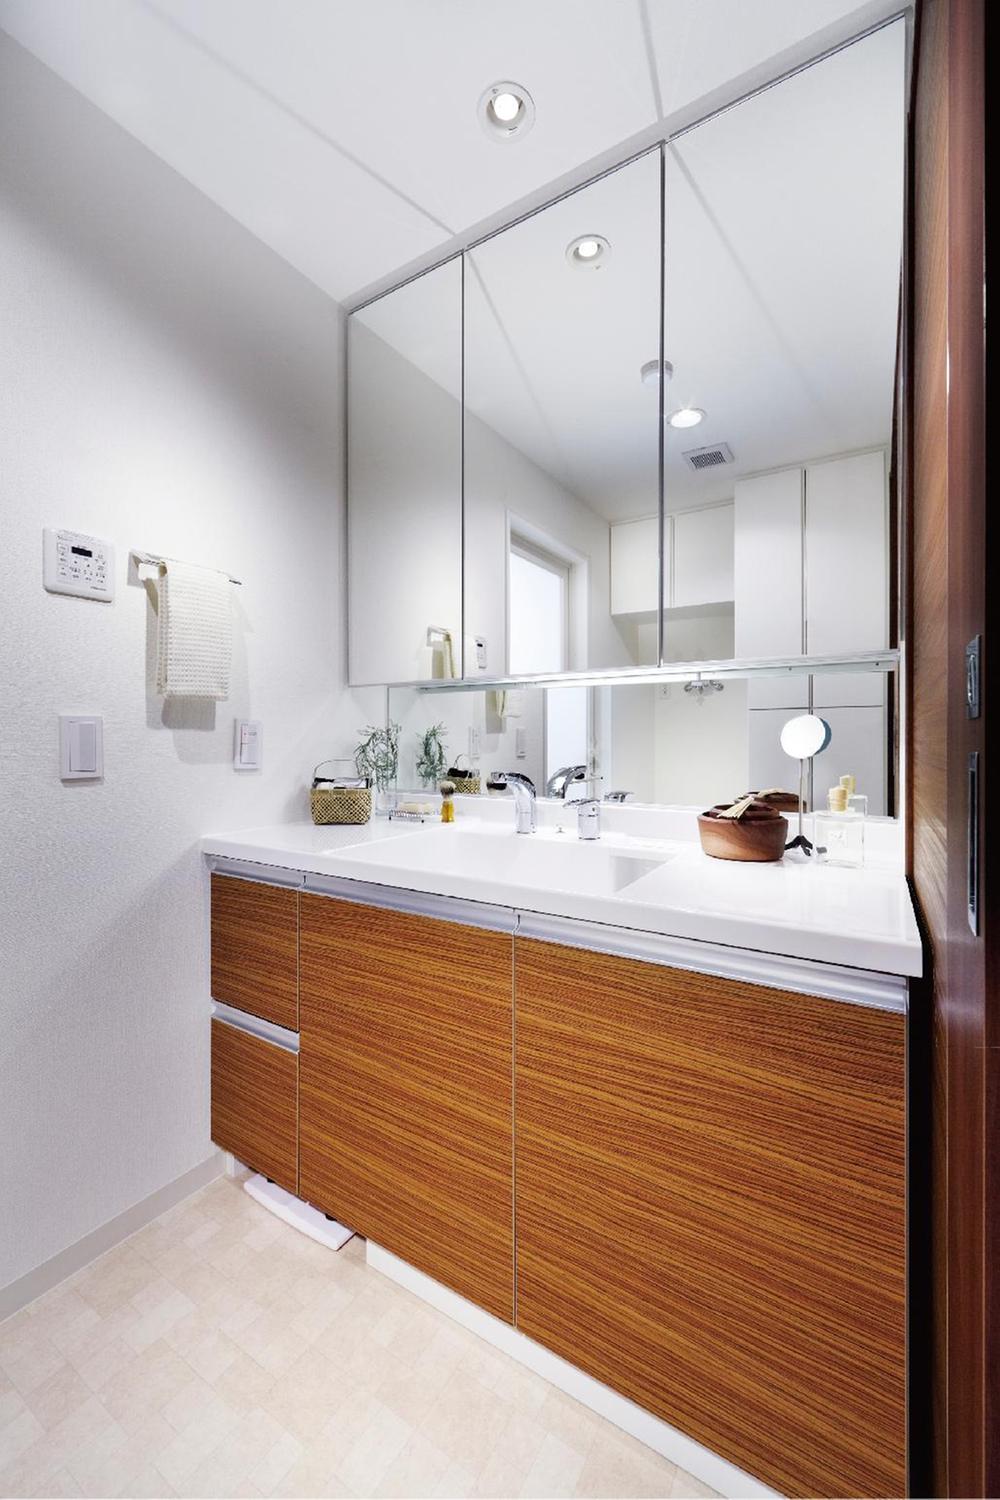 Wash basin, toilet. Three-sided mirror ・ Shower head